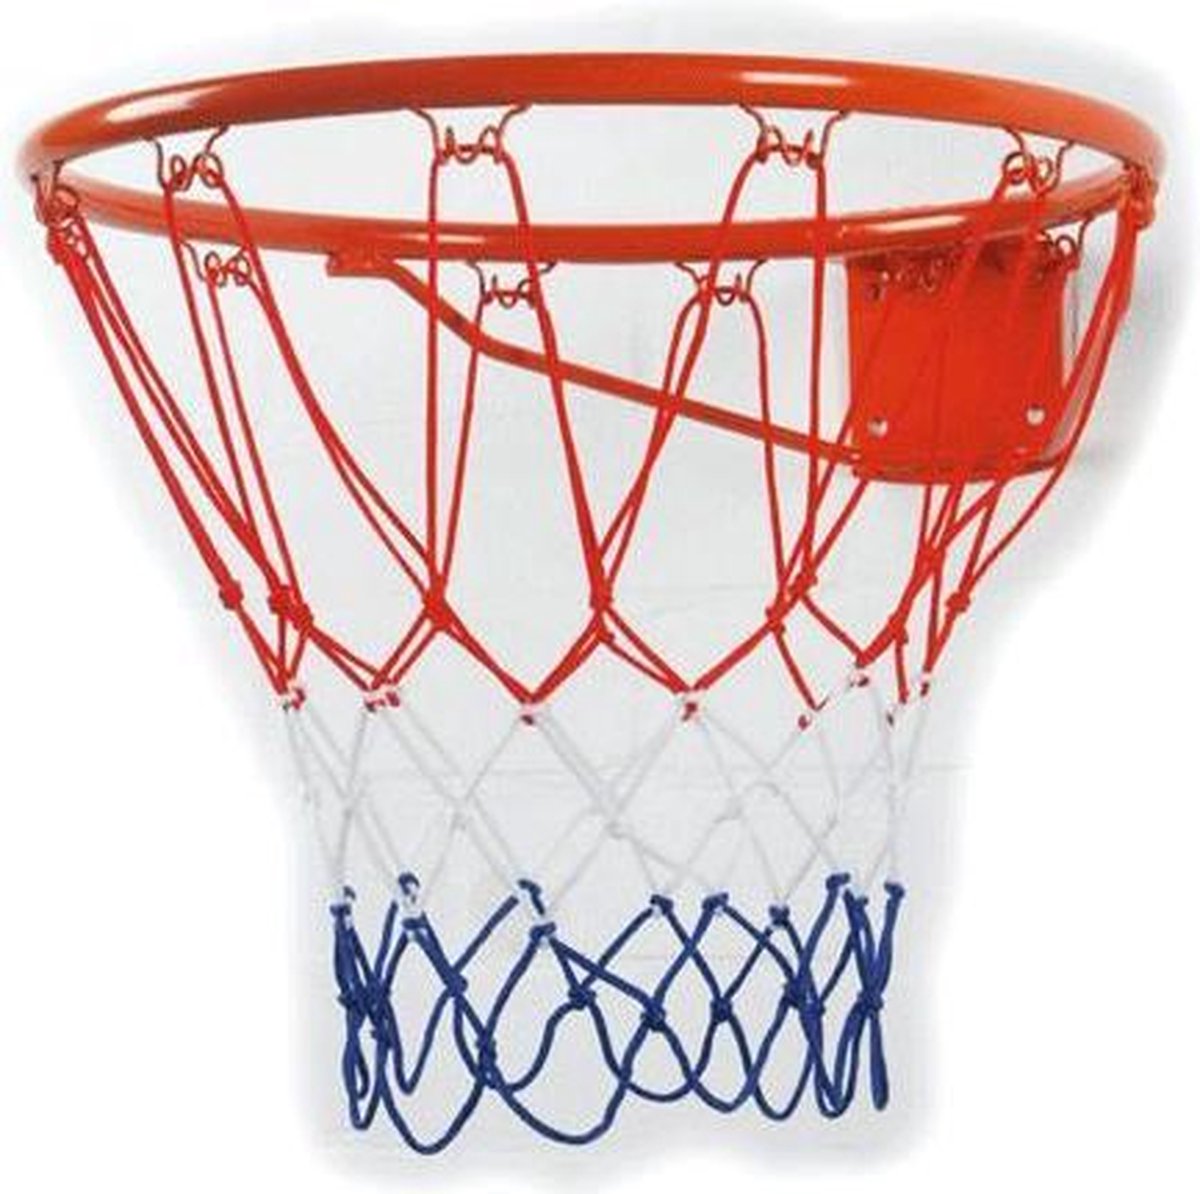 Basketbal ring met net | bol.com